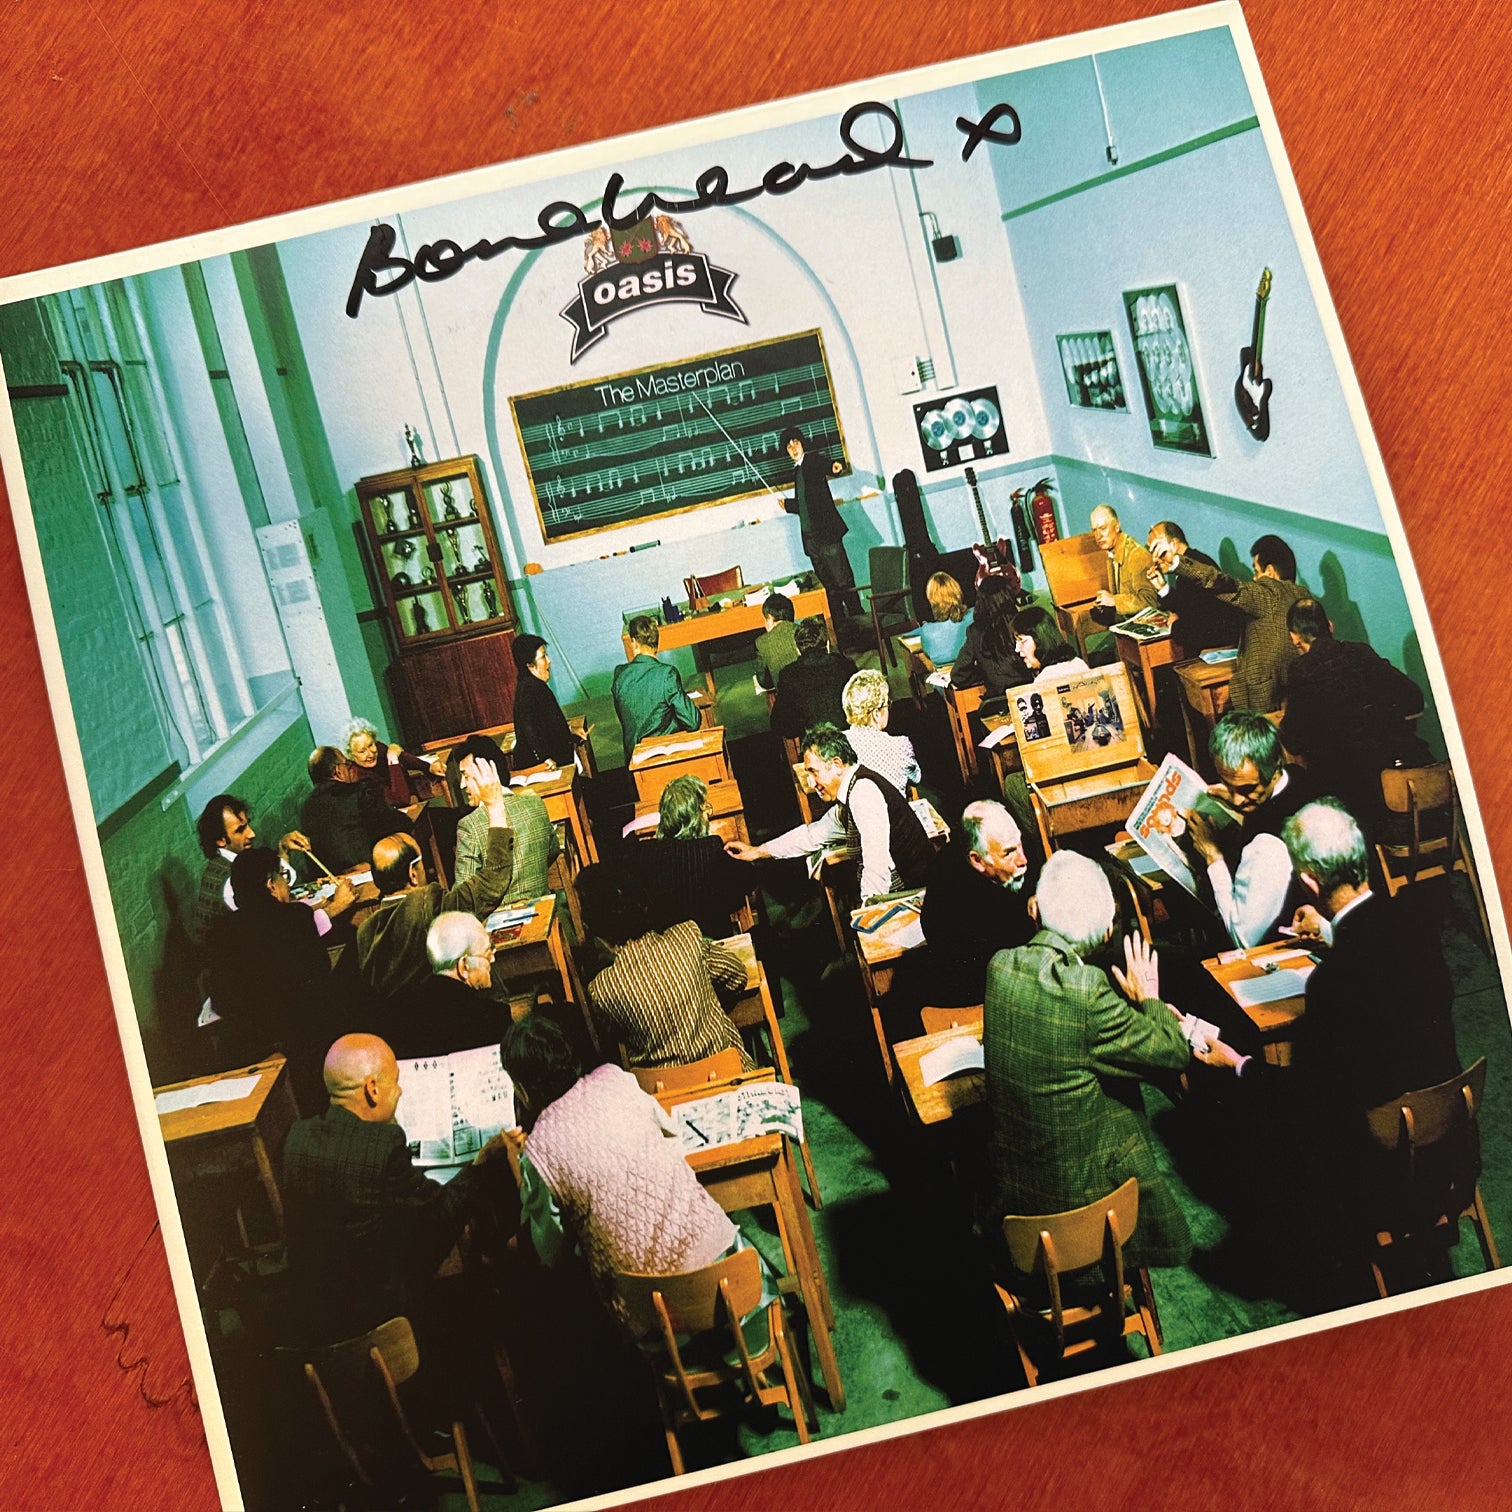 Bonehead Signed - Oasis - The Masterplan - Unplayed Vinyl - New Item